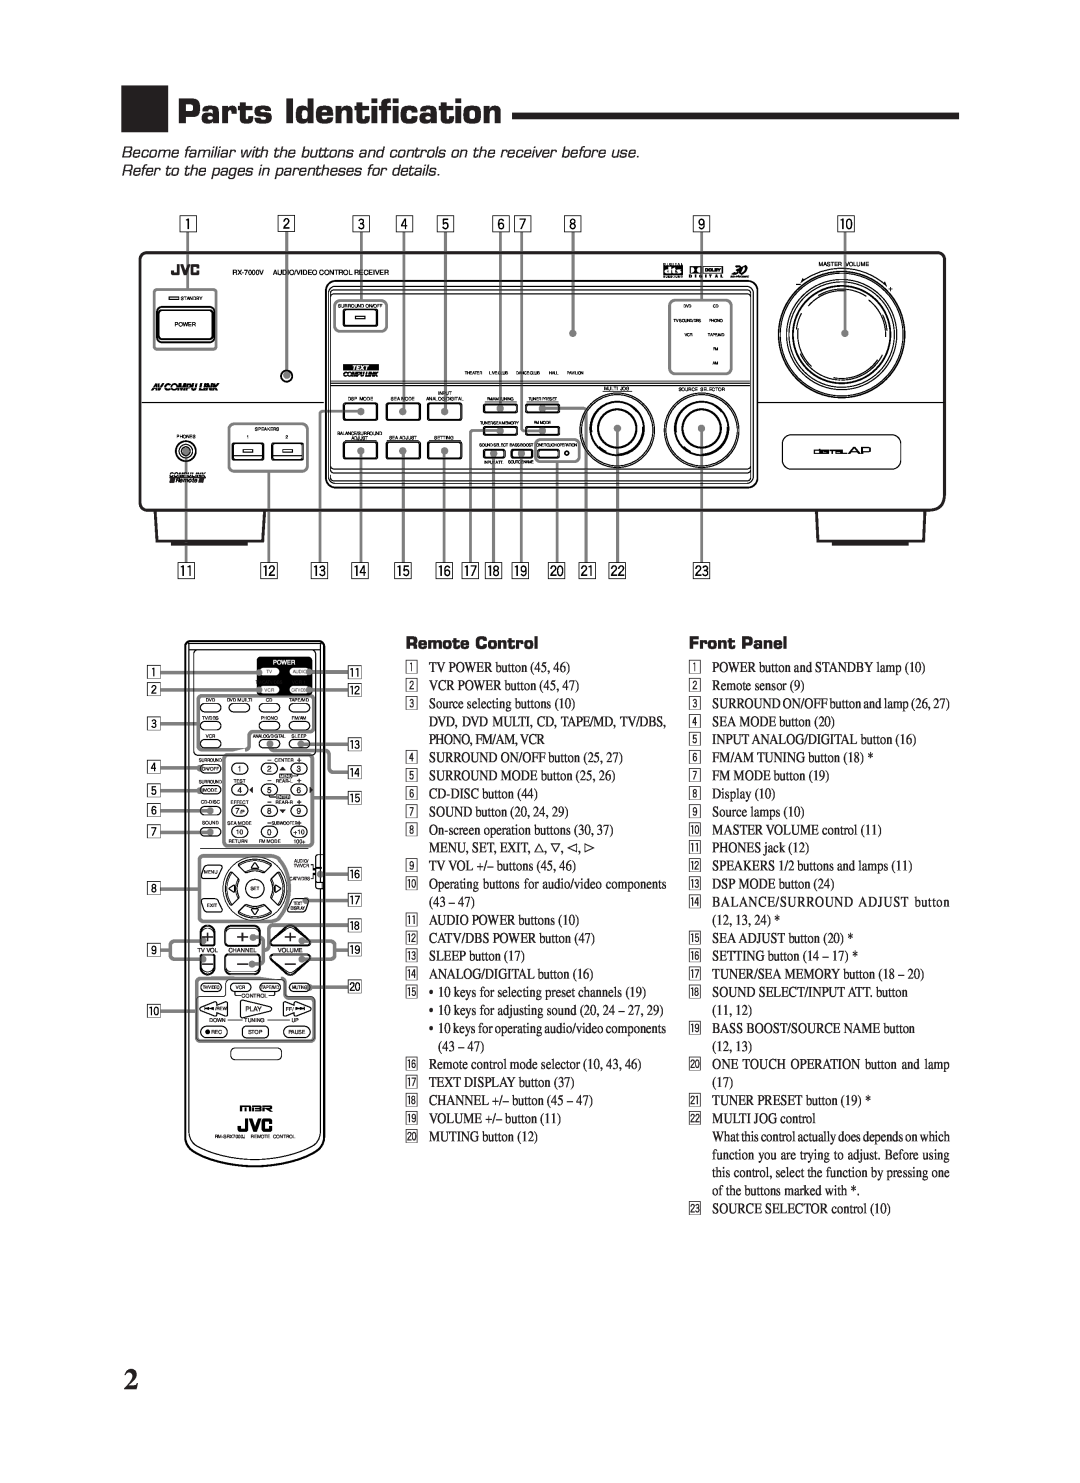 JVC RX-7000VBK manual Parts Identification 